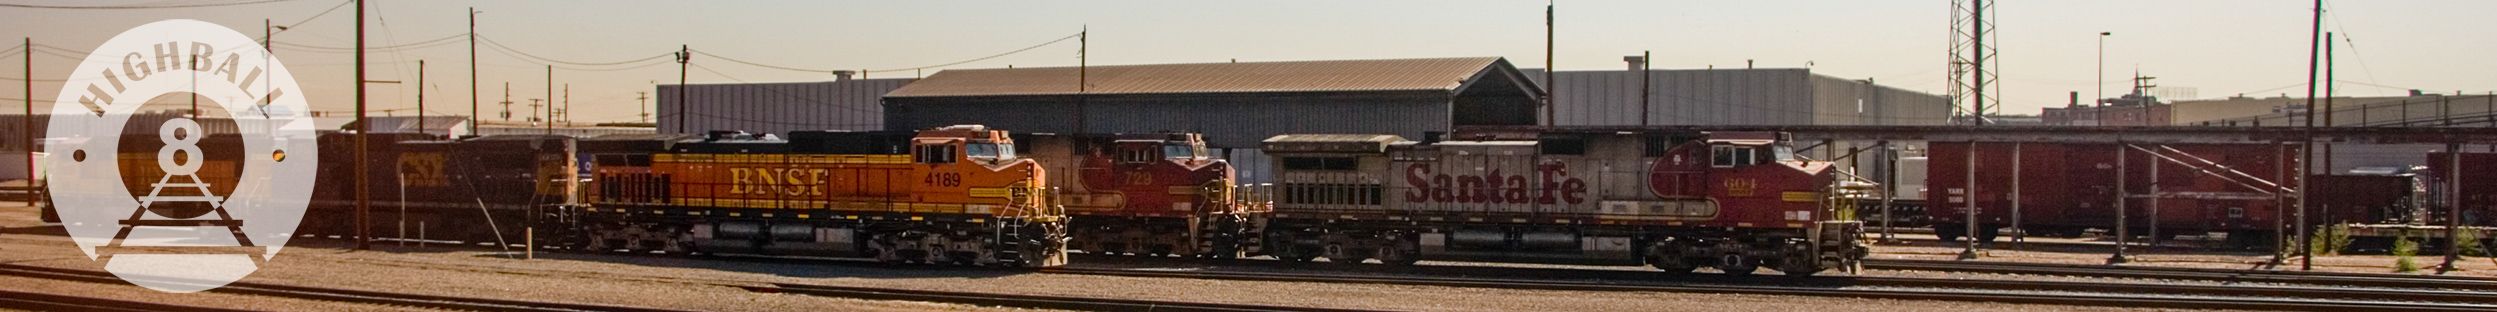 Locomotives belonging to BNSF (Burlington Northern Sante Fe Railroad) with various liveries or paint schemes, Denver, Colorado, 2008.